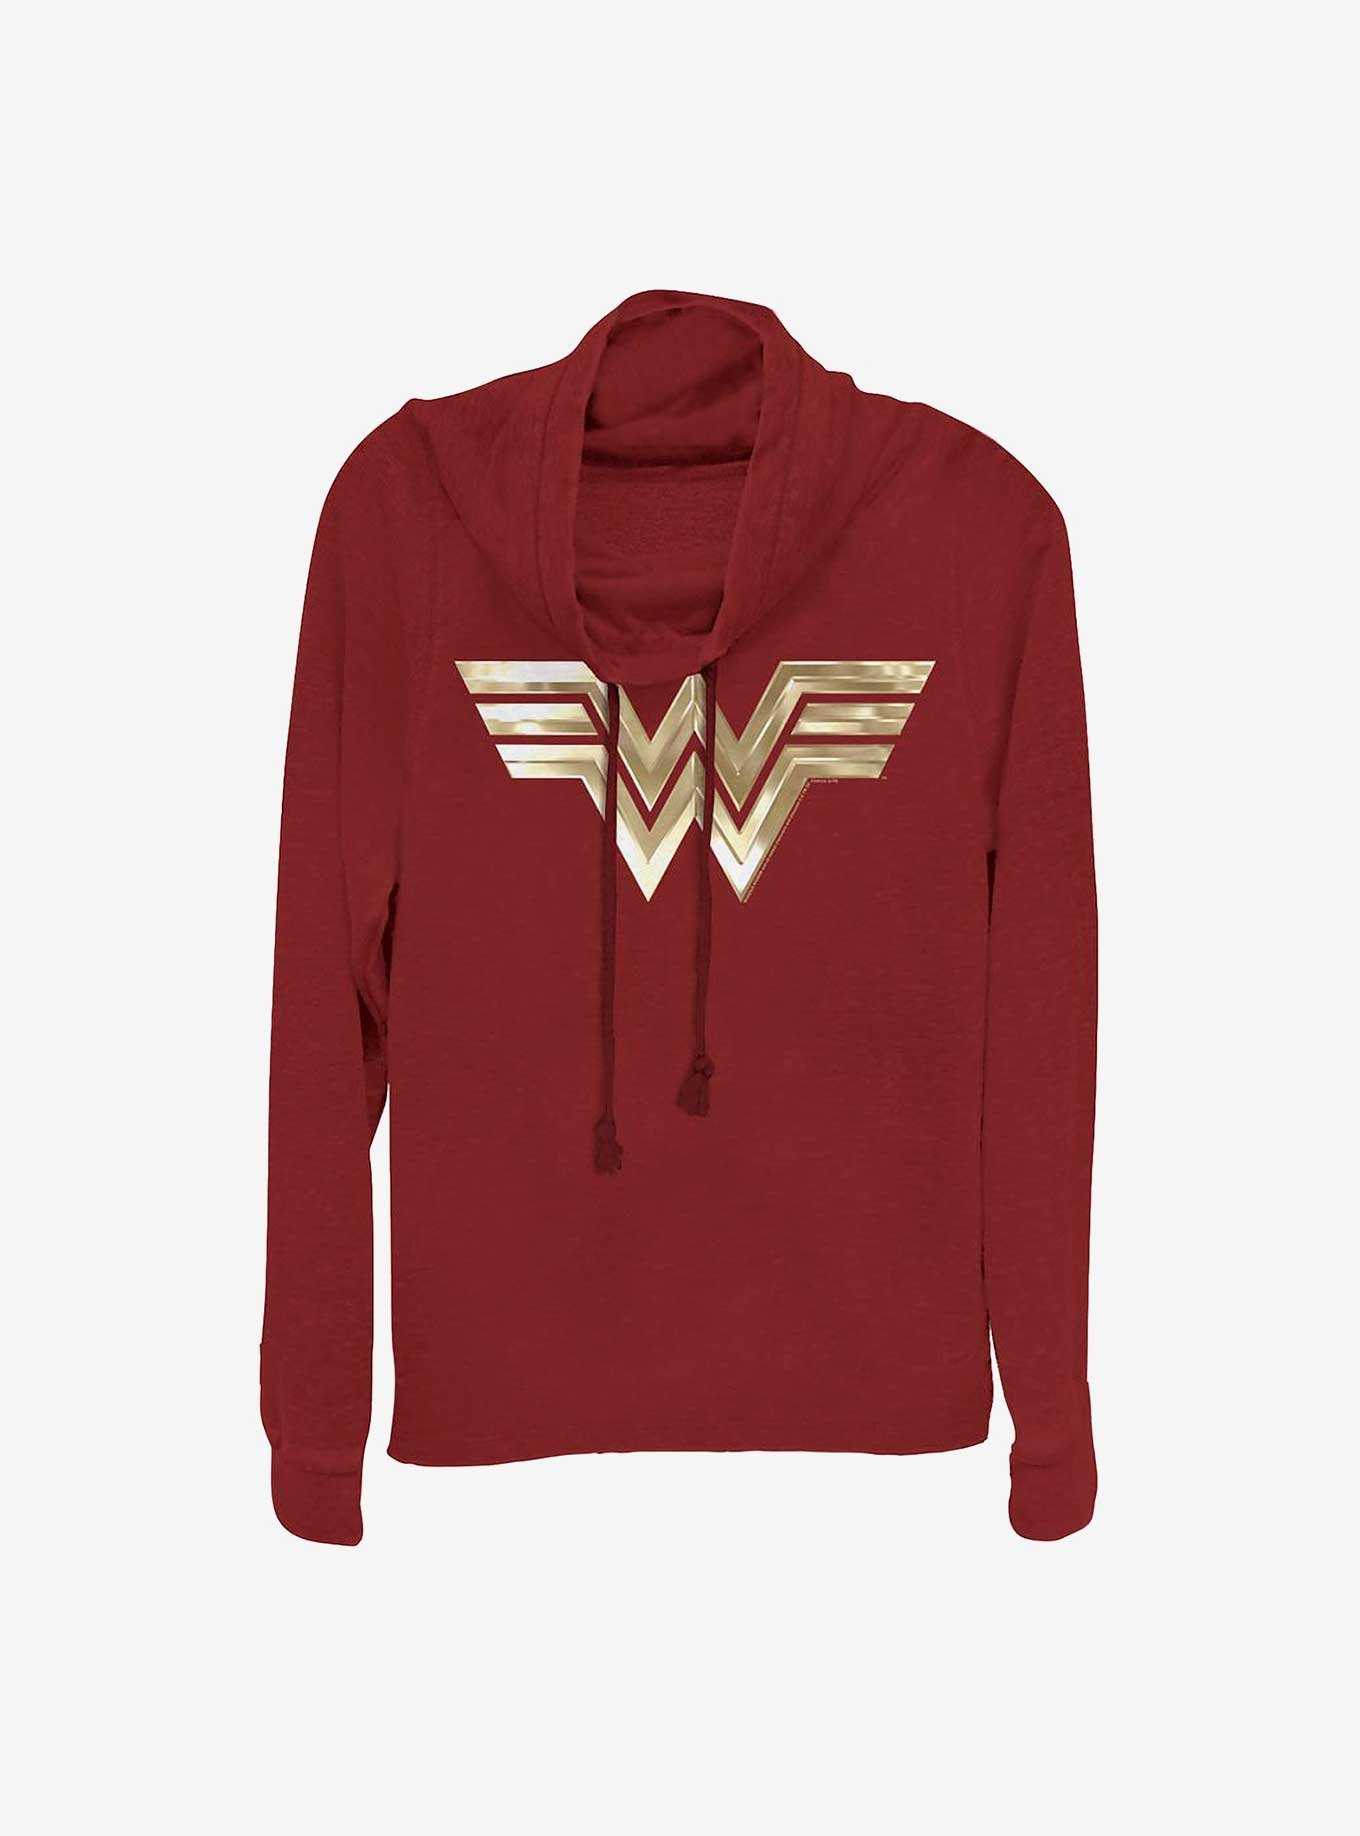 Buy Your Wonder Woman Premium Hoodie (Free Shipping) - Merchoid